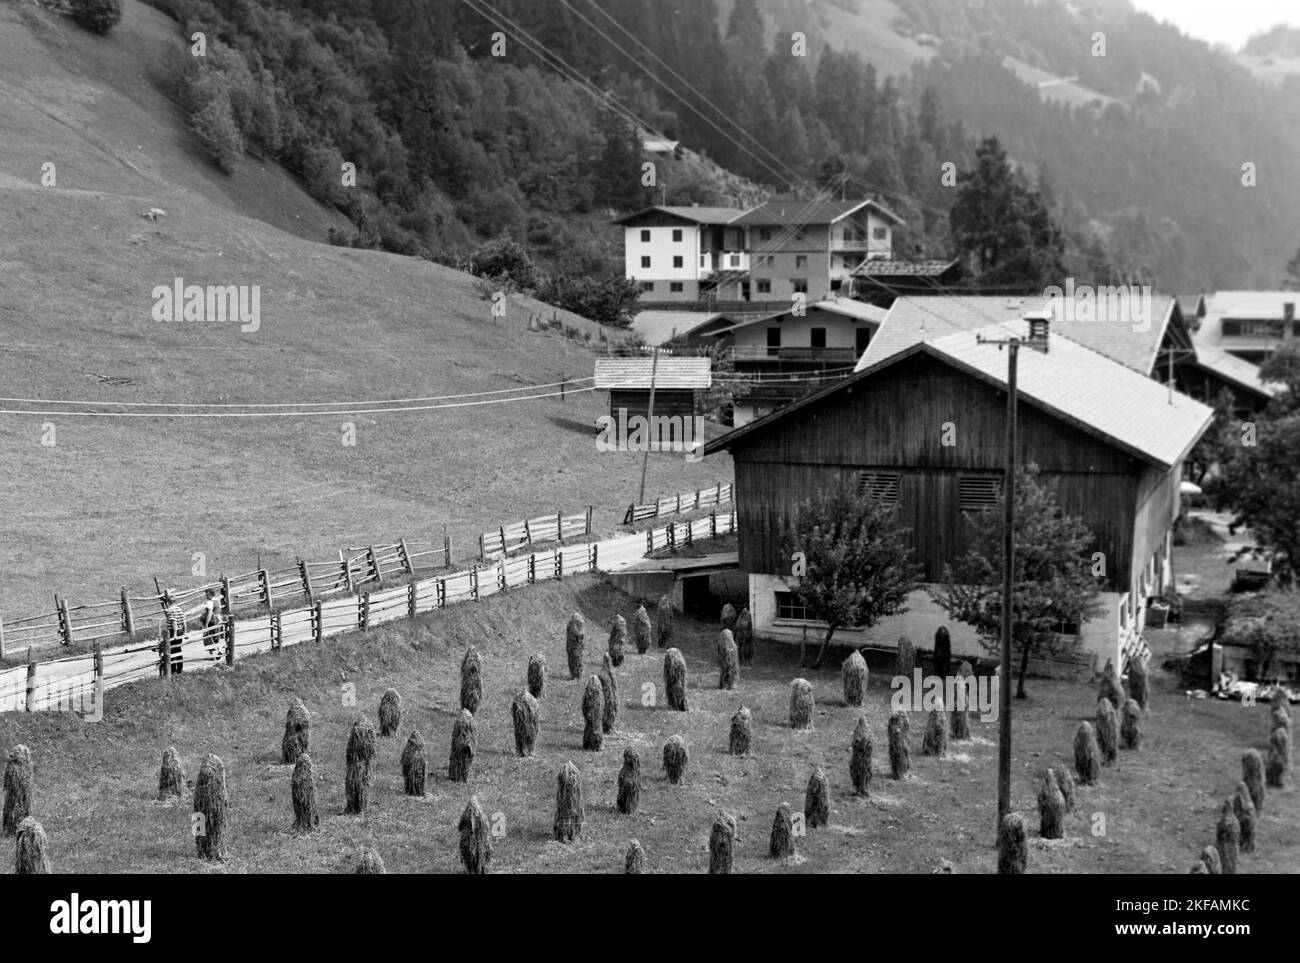 Bauernhof Zillertal, Tirol, 1970. Ferme avec des haystacks dans la vallée de Ziller, Tyrol, 1970. Banque D'Images